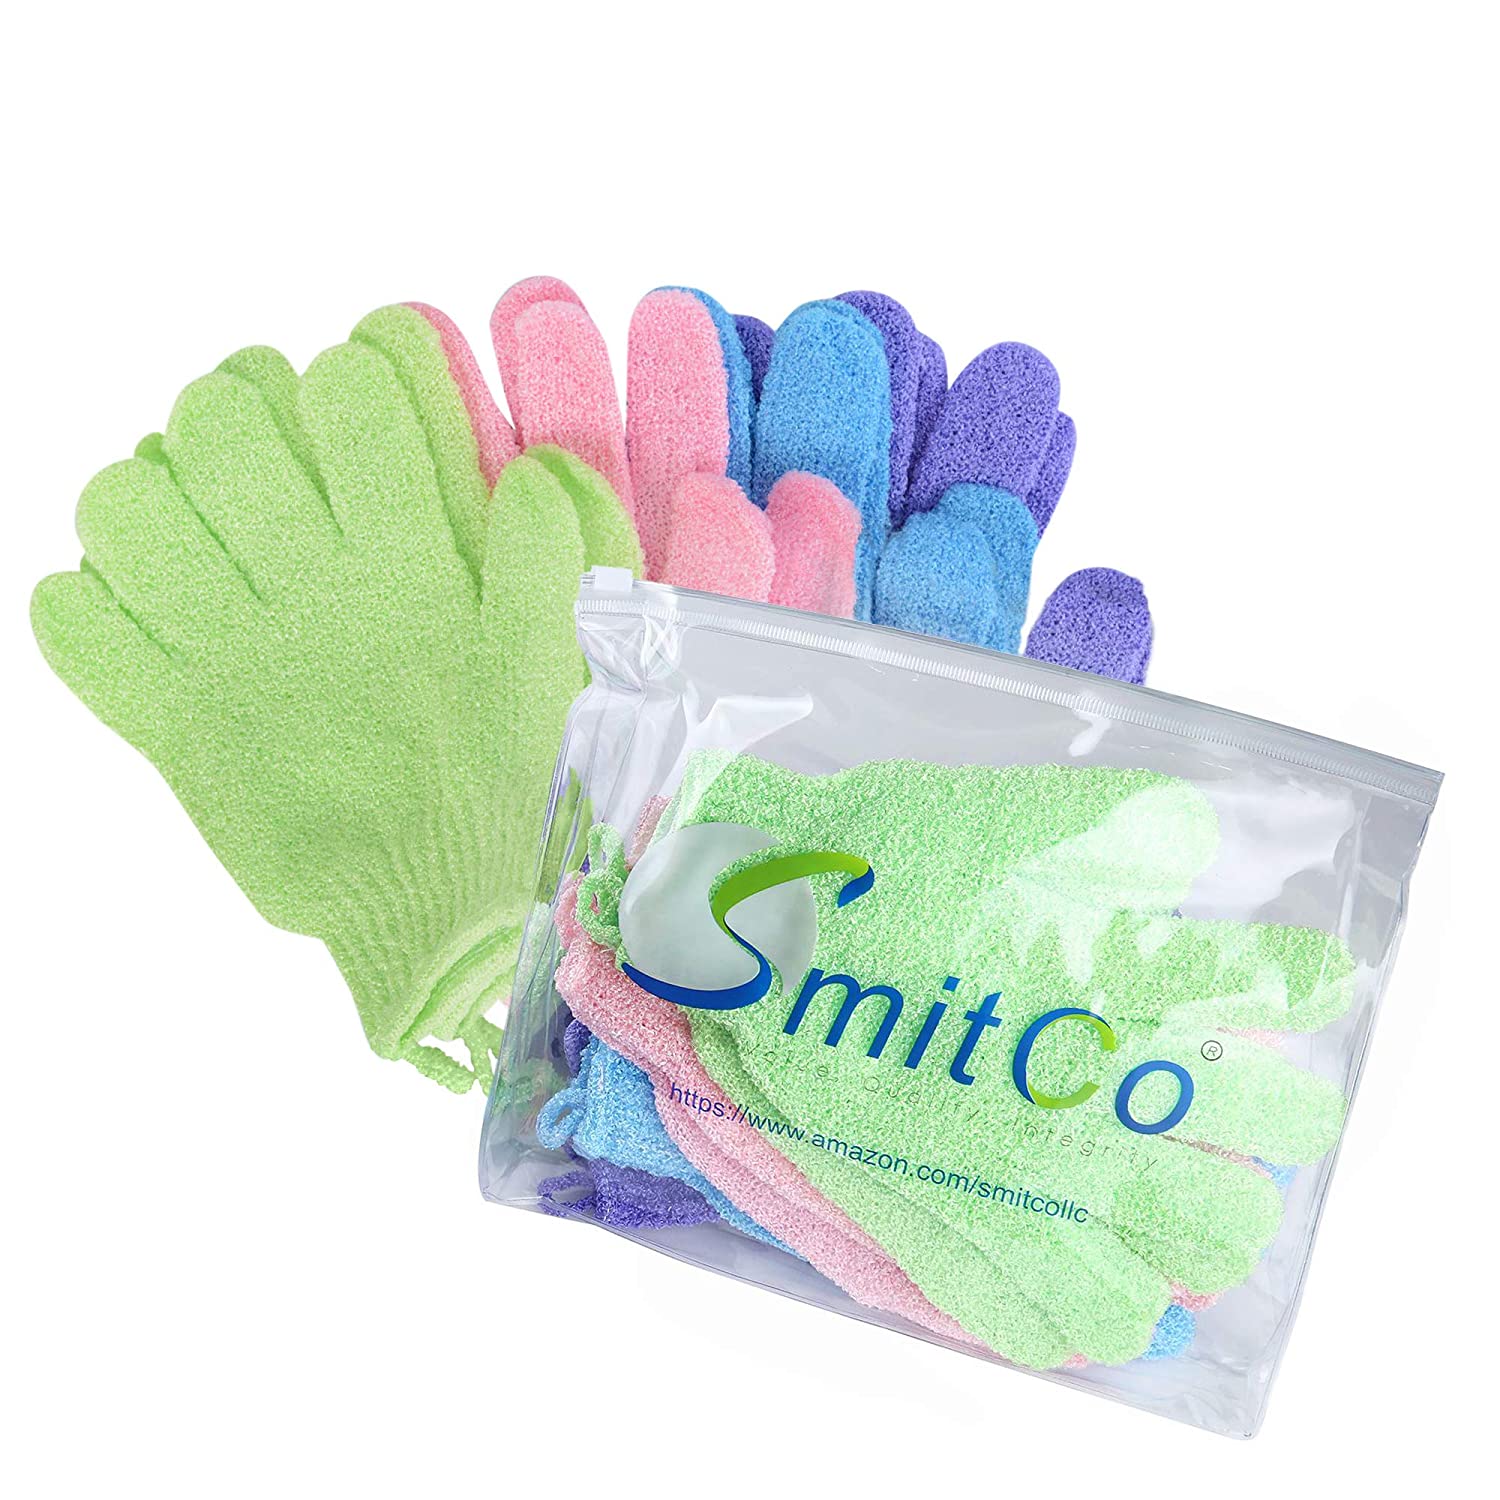 SMITCO Exfoliating Gloves, 4-Pair